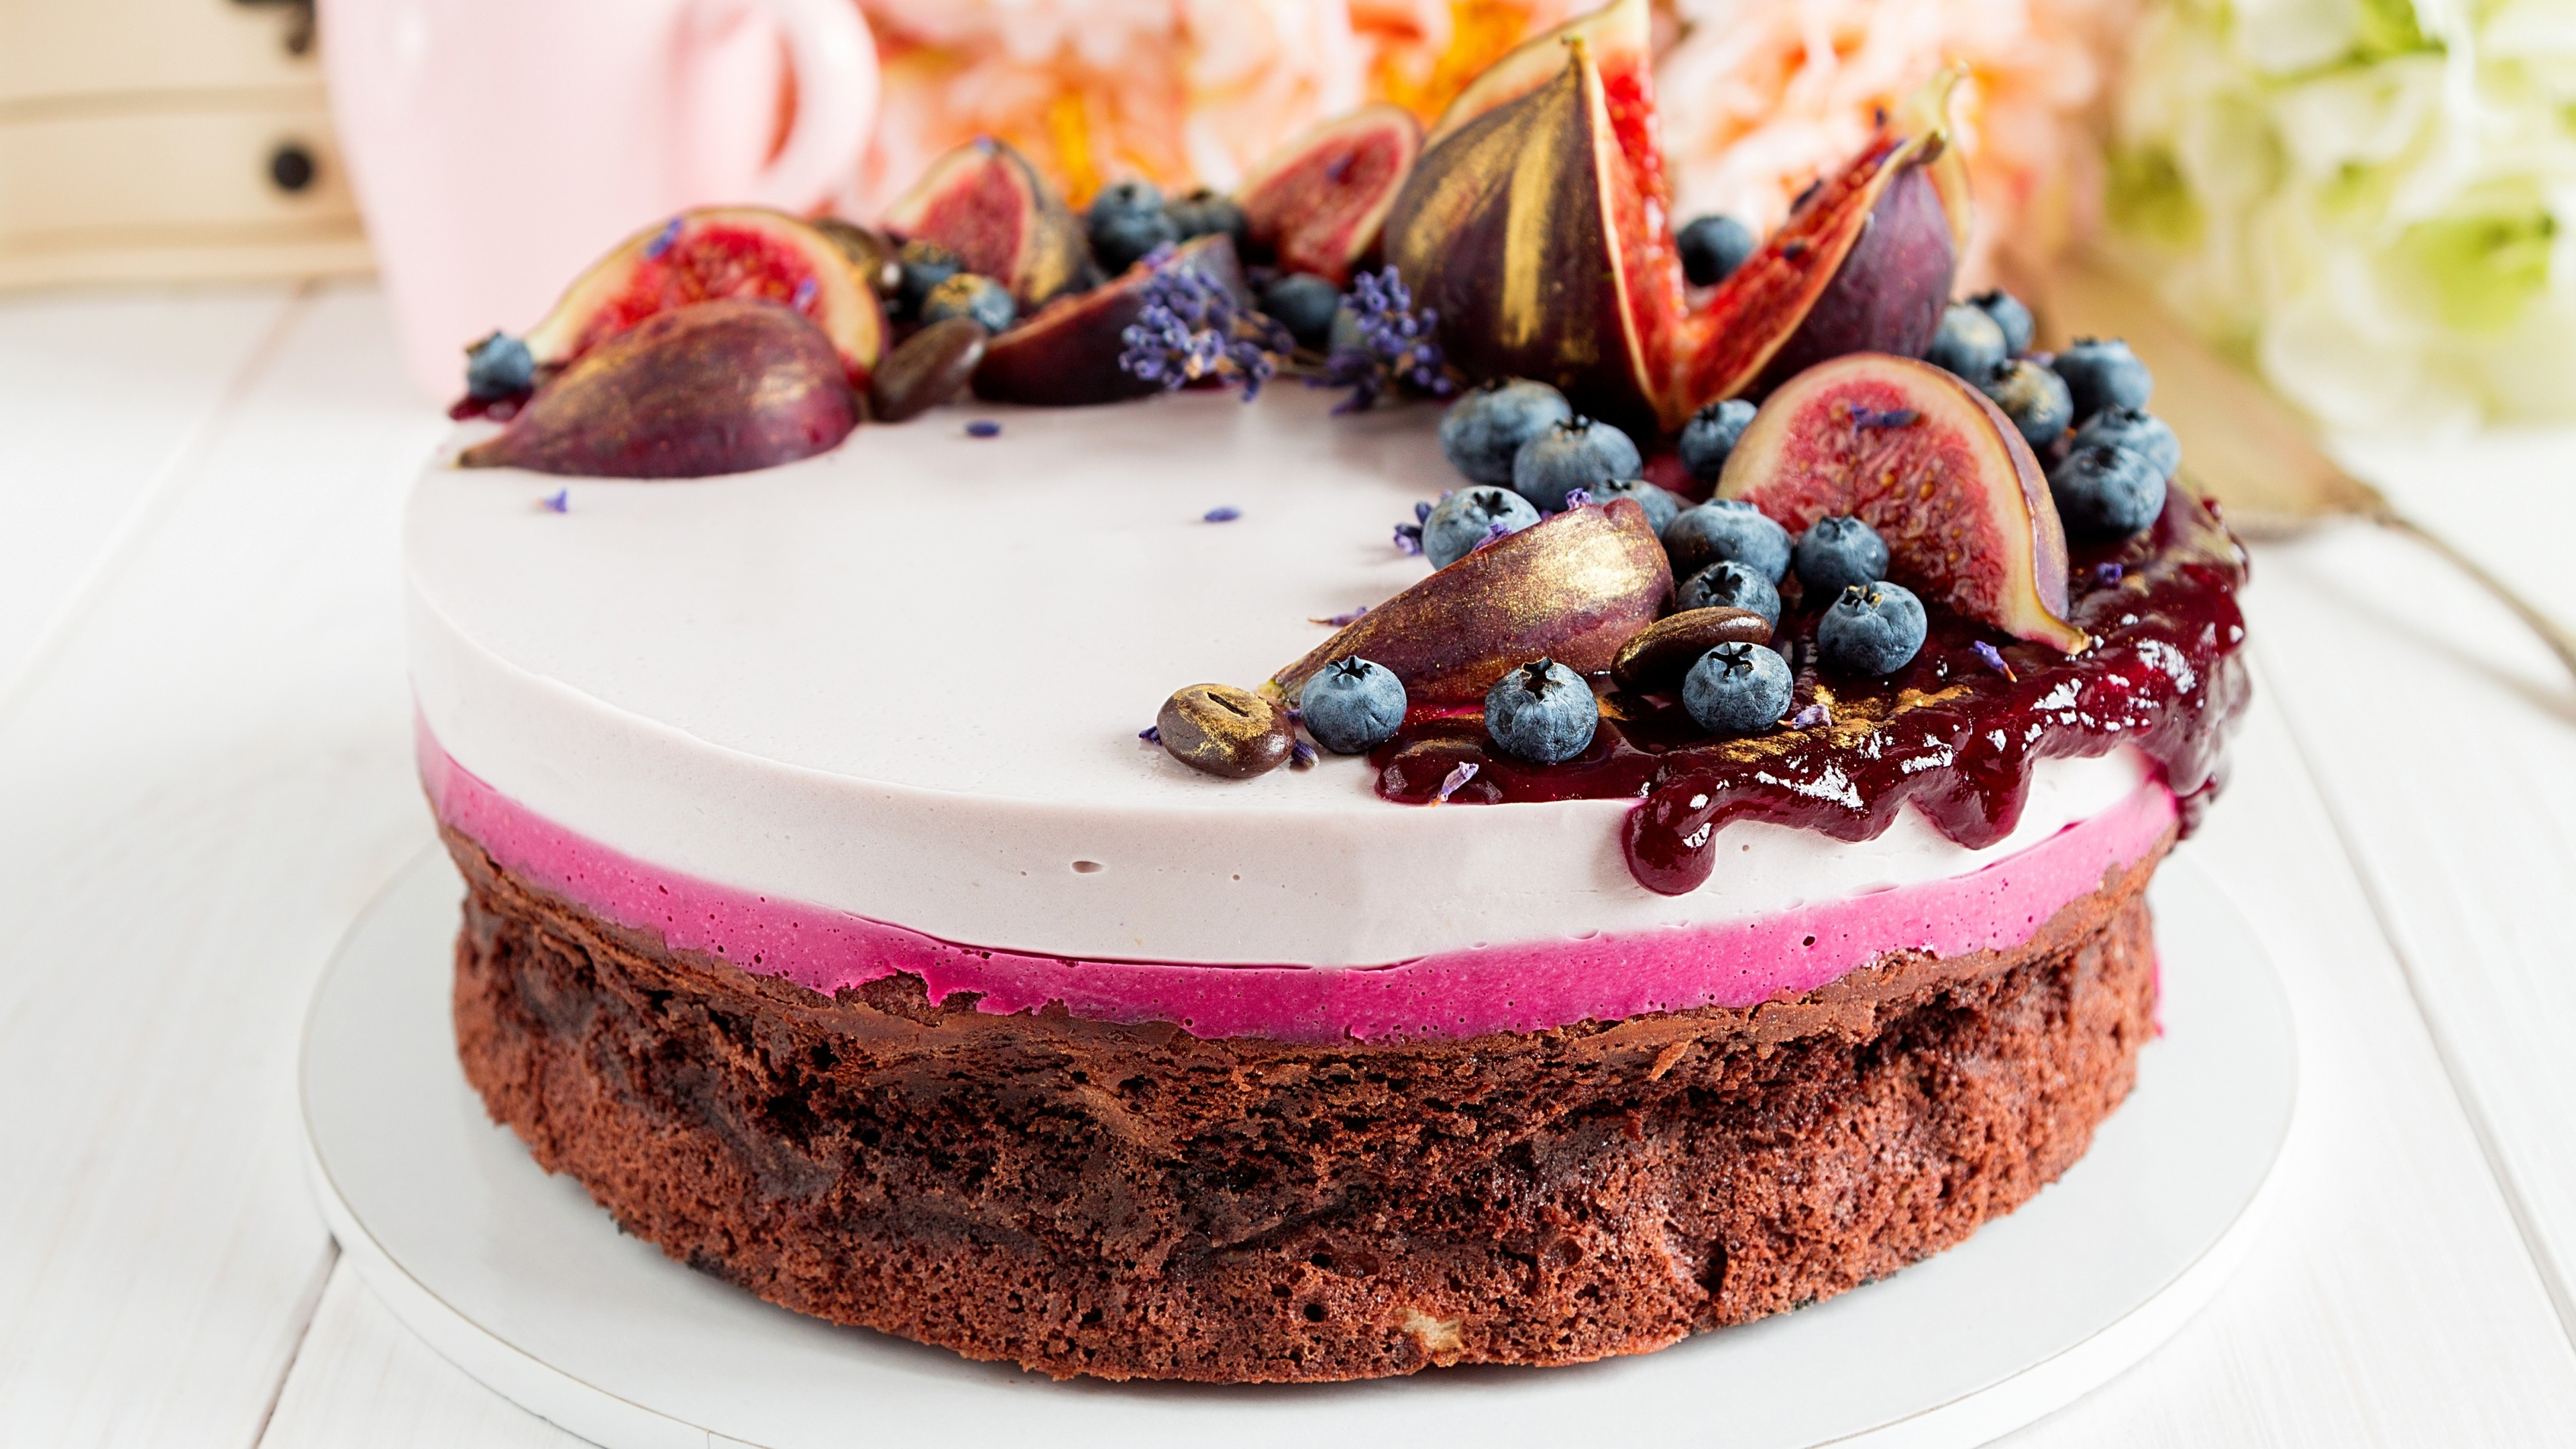 Fig: Cake, Dessert, Blueberries, The edible fruit of Ficus carica. 3840x2160 4K Wallpaper.